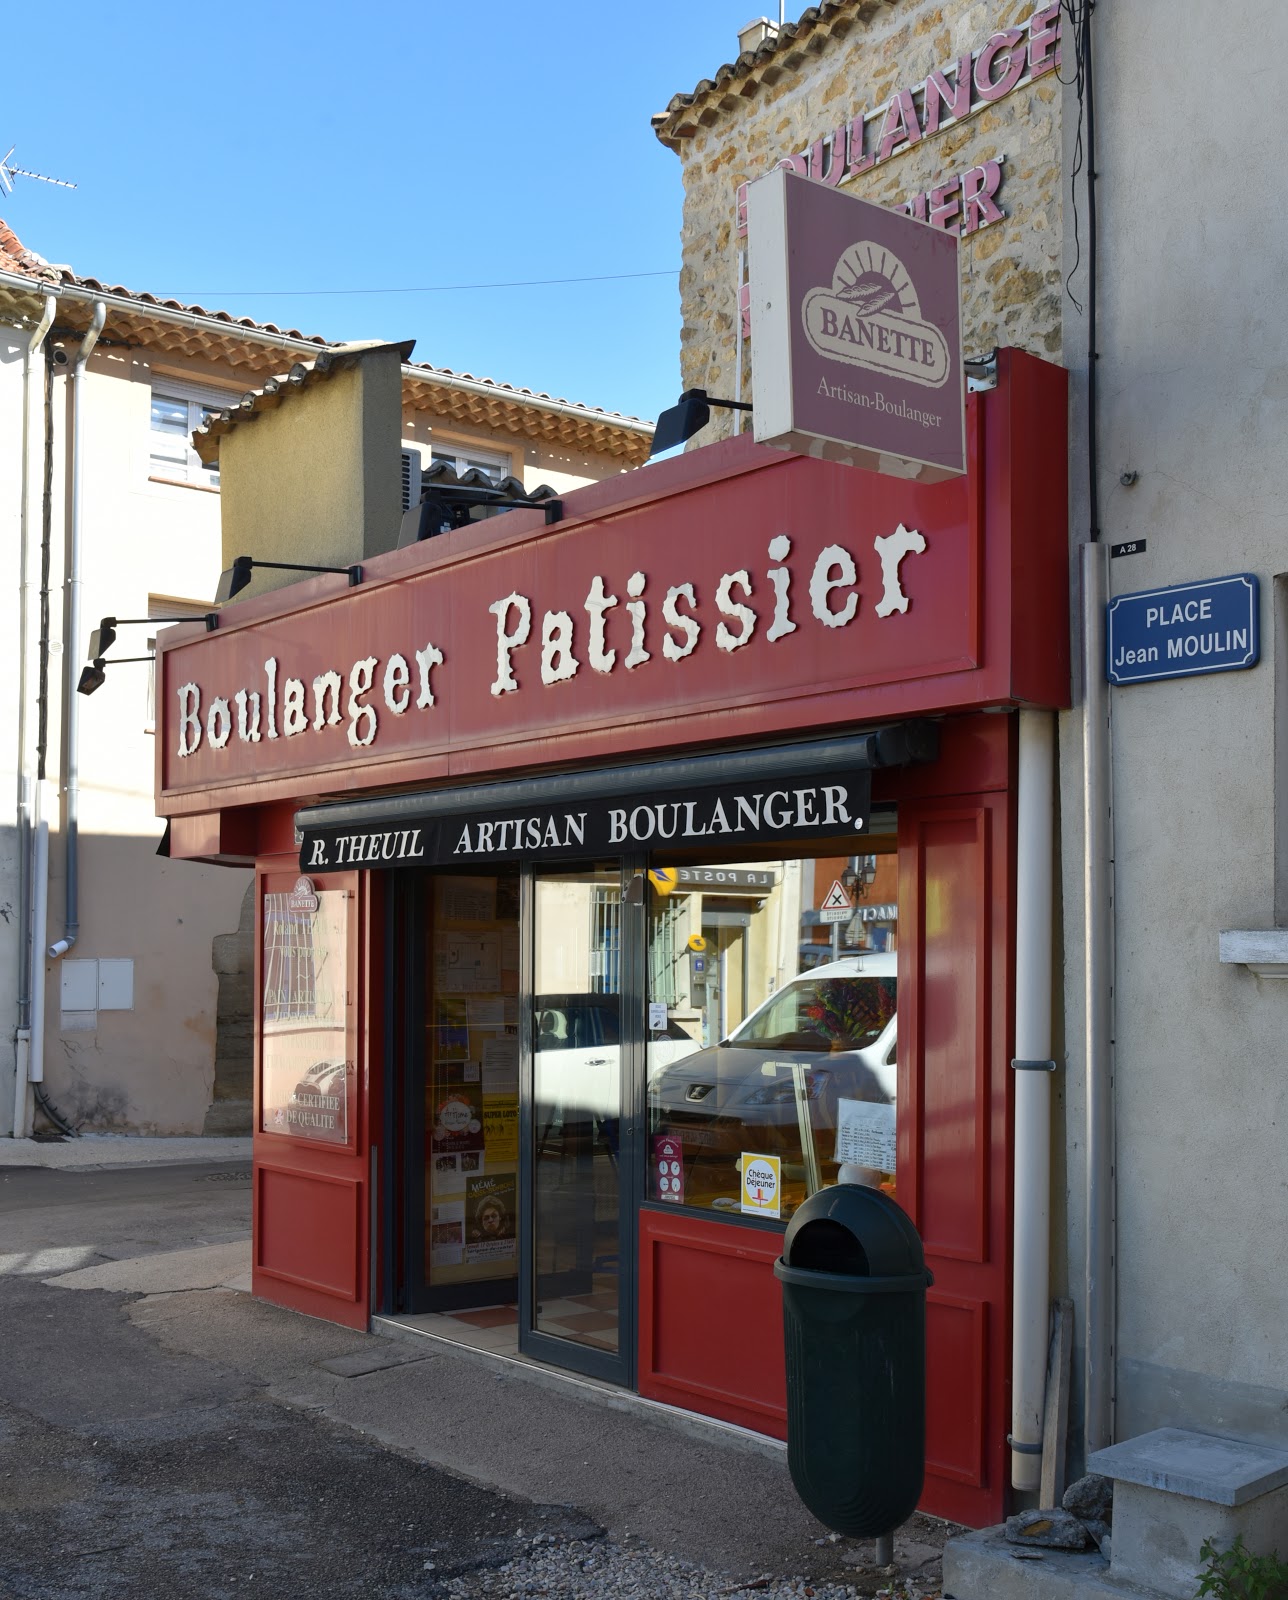 Boulangerie Patisserie Theui Banette